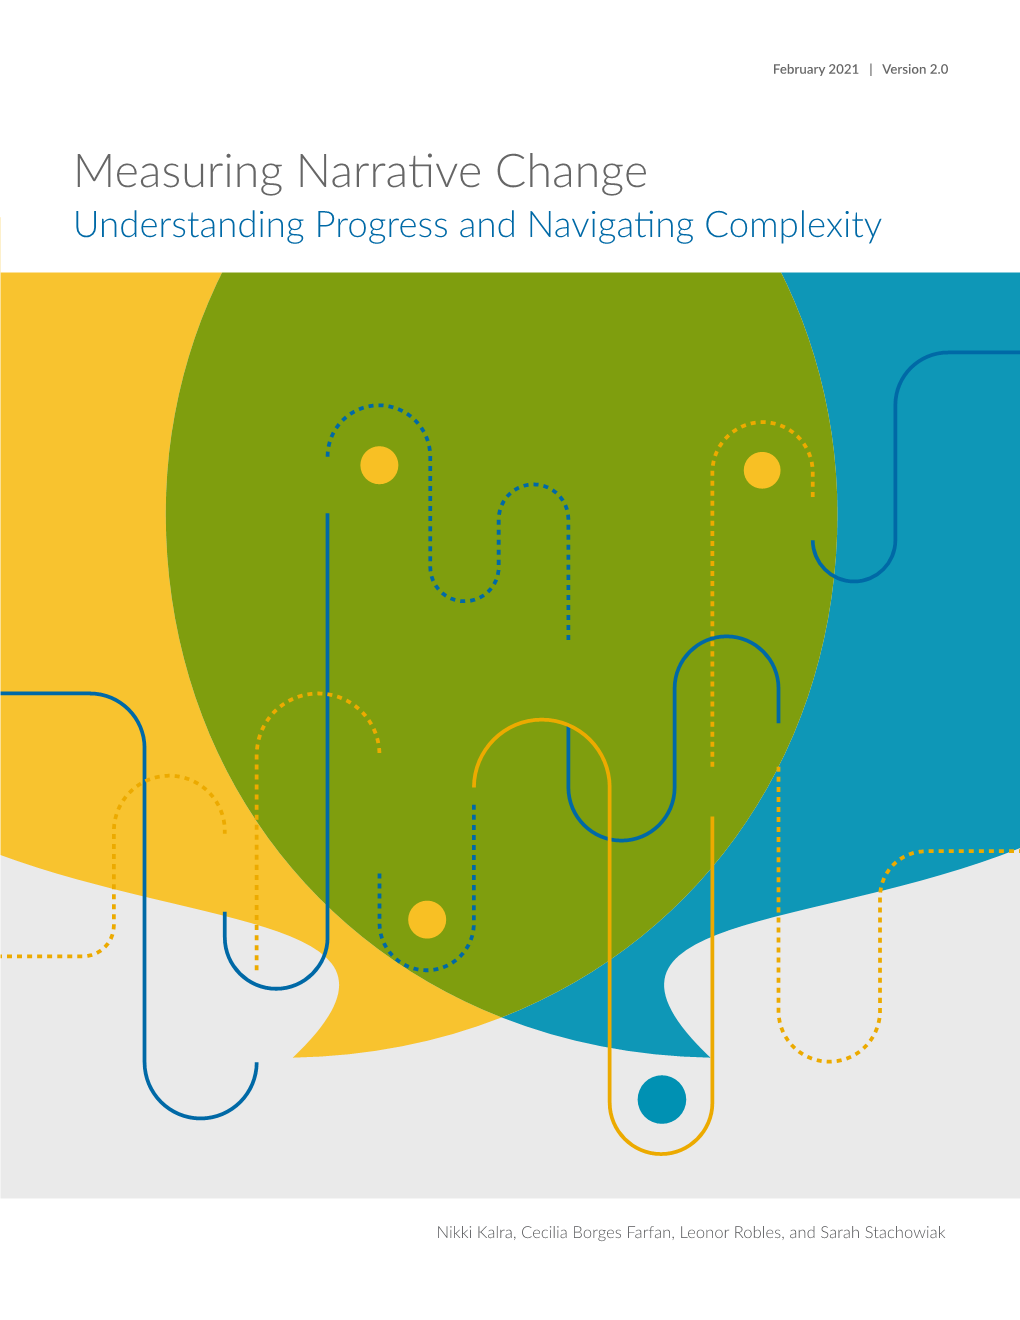 Measuring Narrative Change Understanding Progress and Navigating Complexity